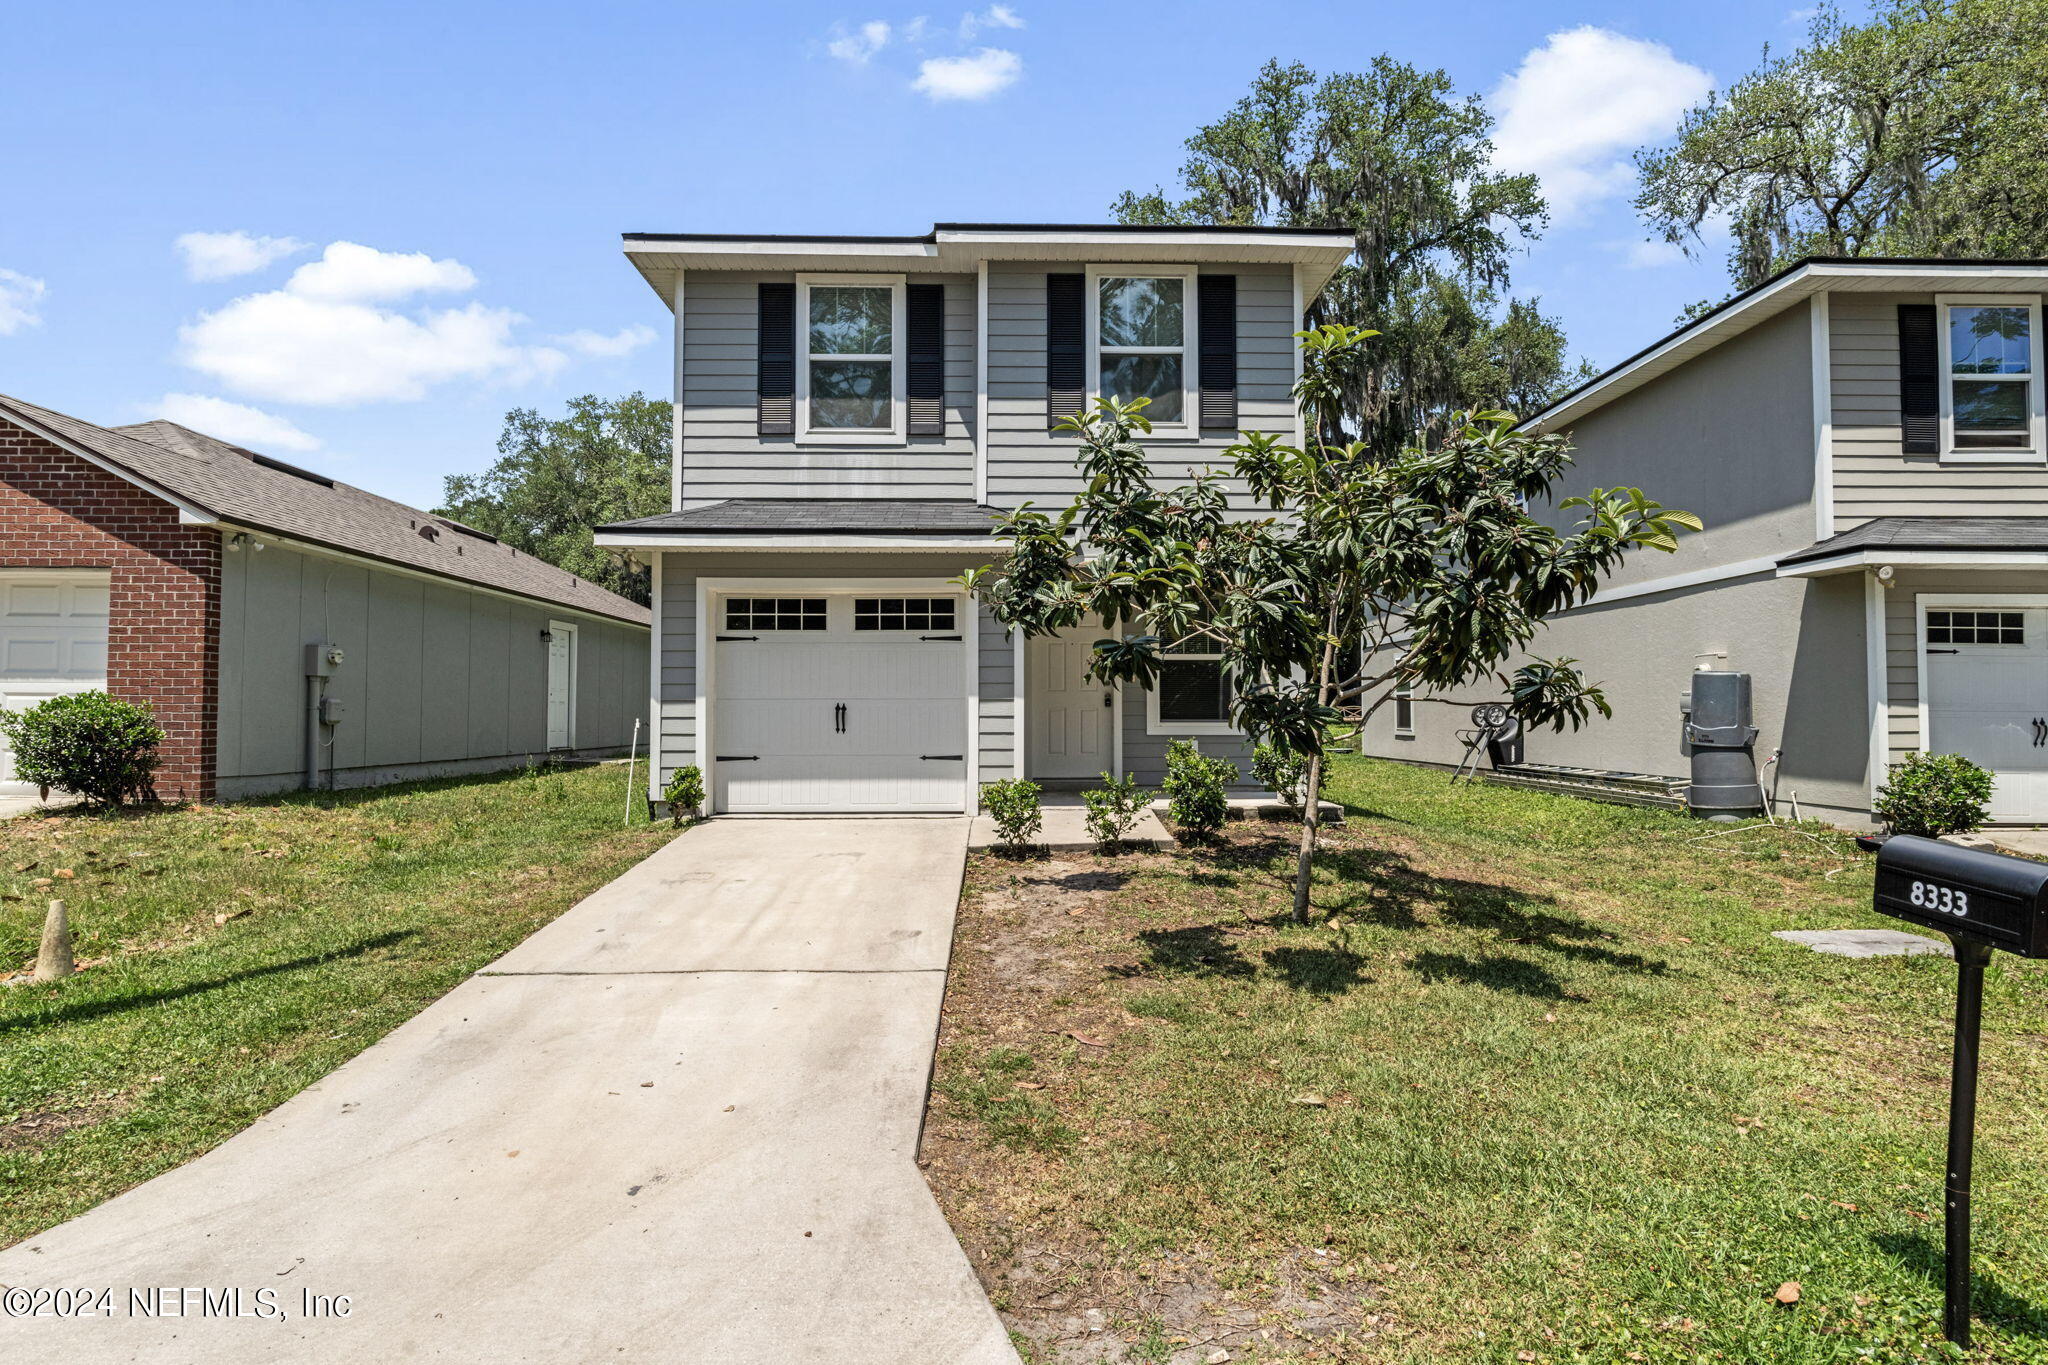 Jacksonville, FL home for sale located at 8333 Woods Avenue, Jacksonville, FL 32216